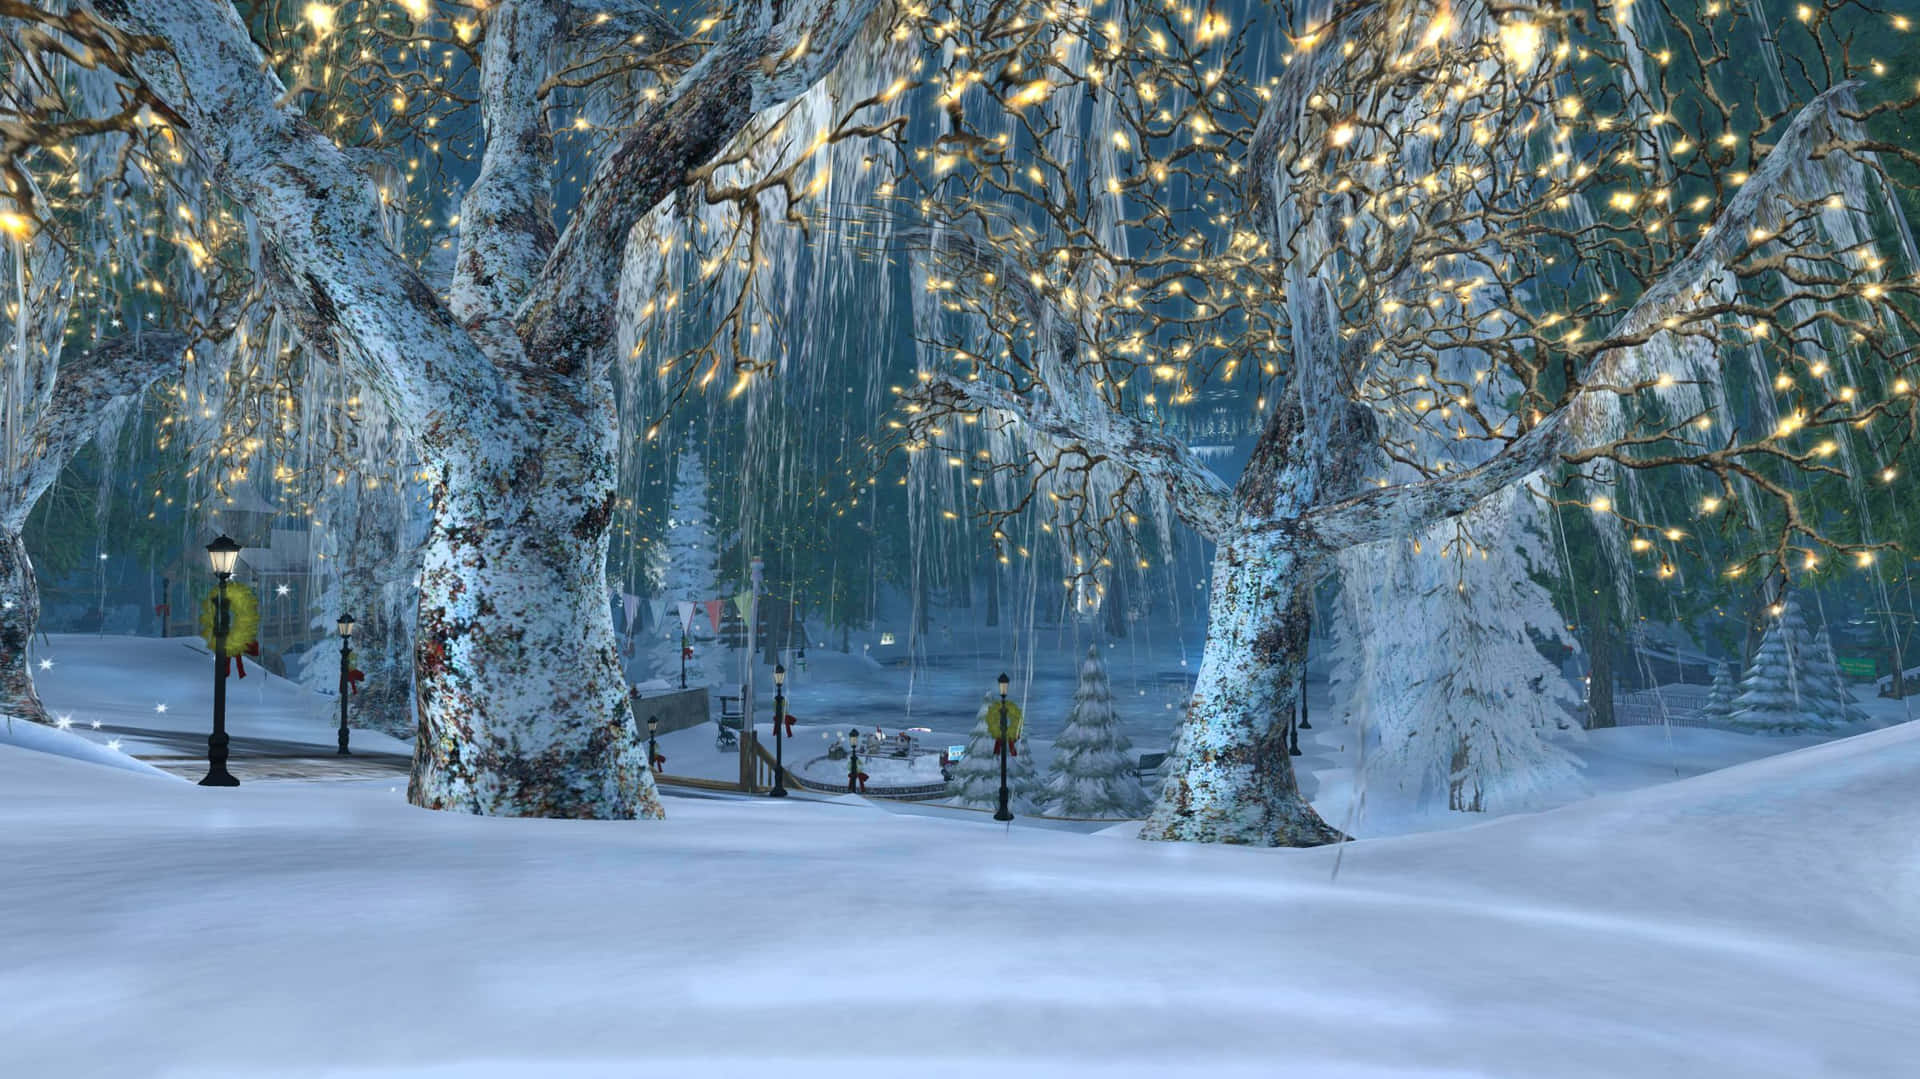 Tranquil Snowy Village nestled in a Winter Wonderland Wallpaper